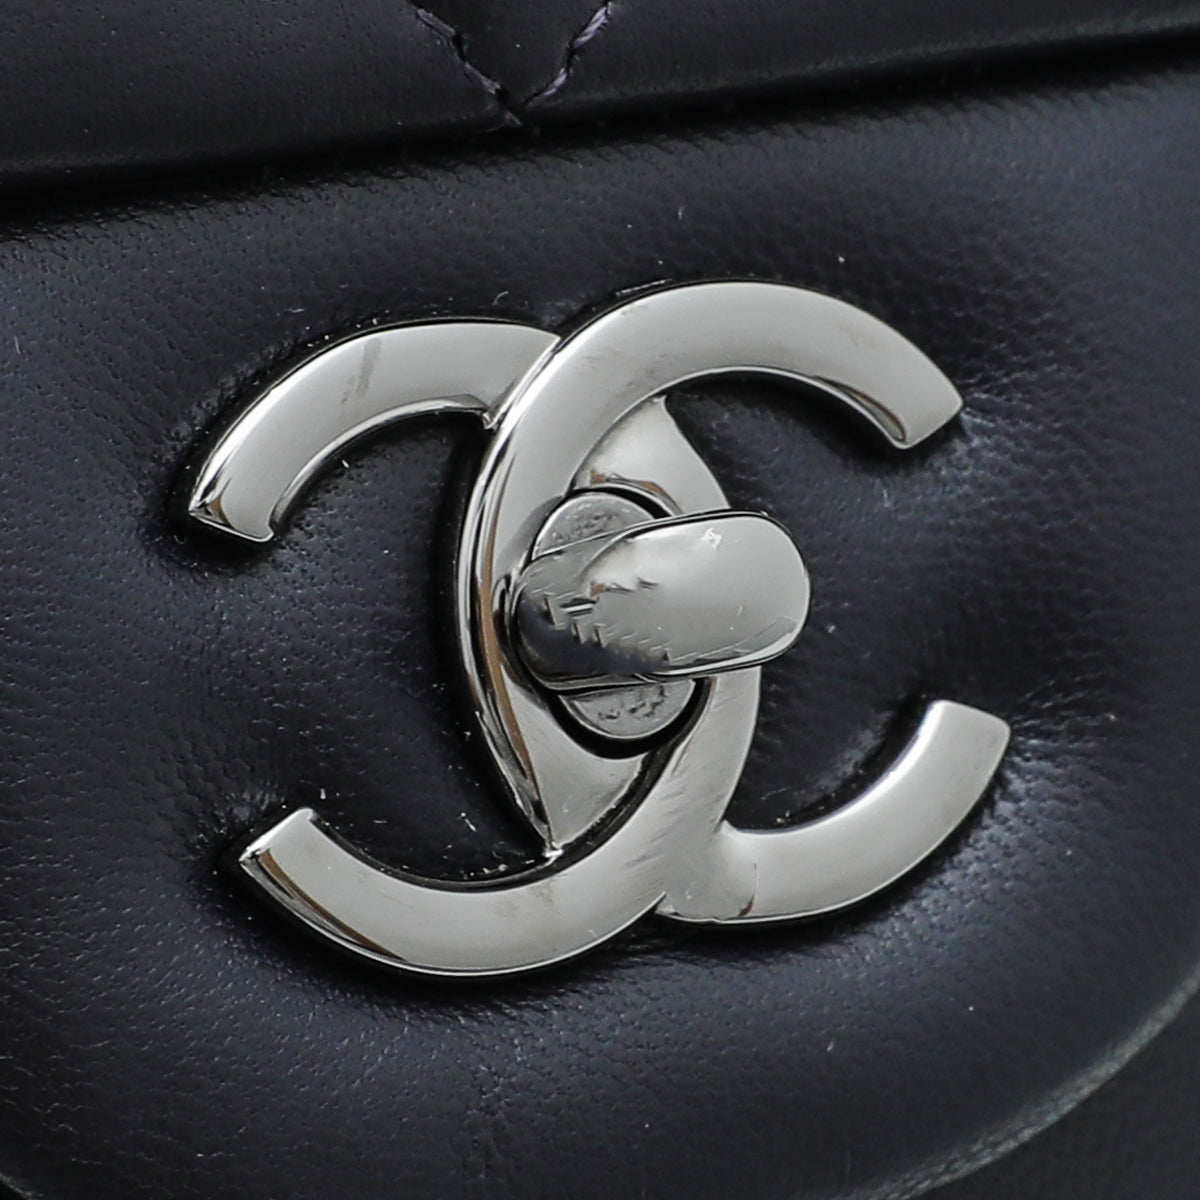 Chanel Indigo Blue CC Classic Double Flap Jumbo Bag